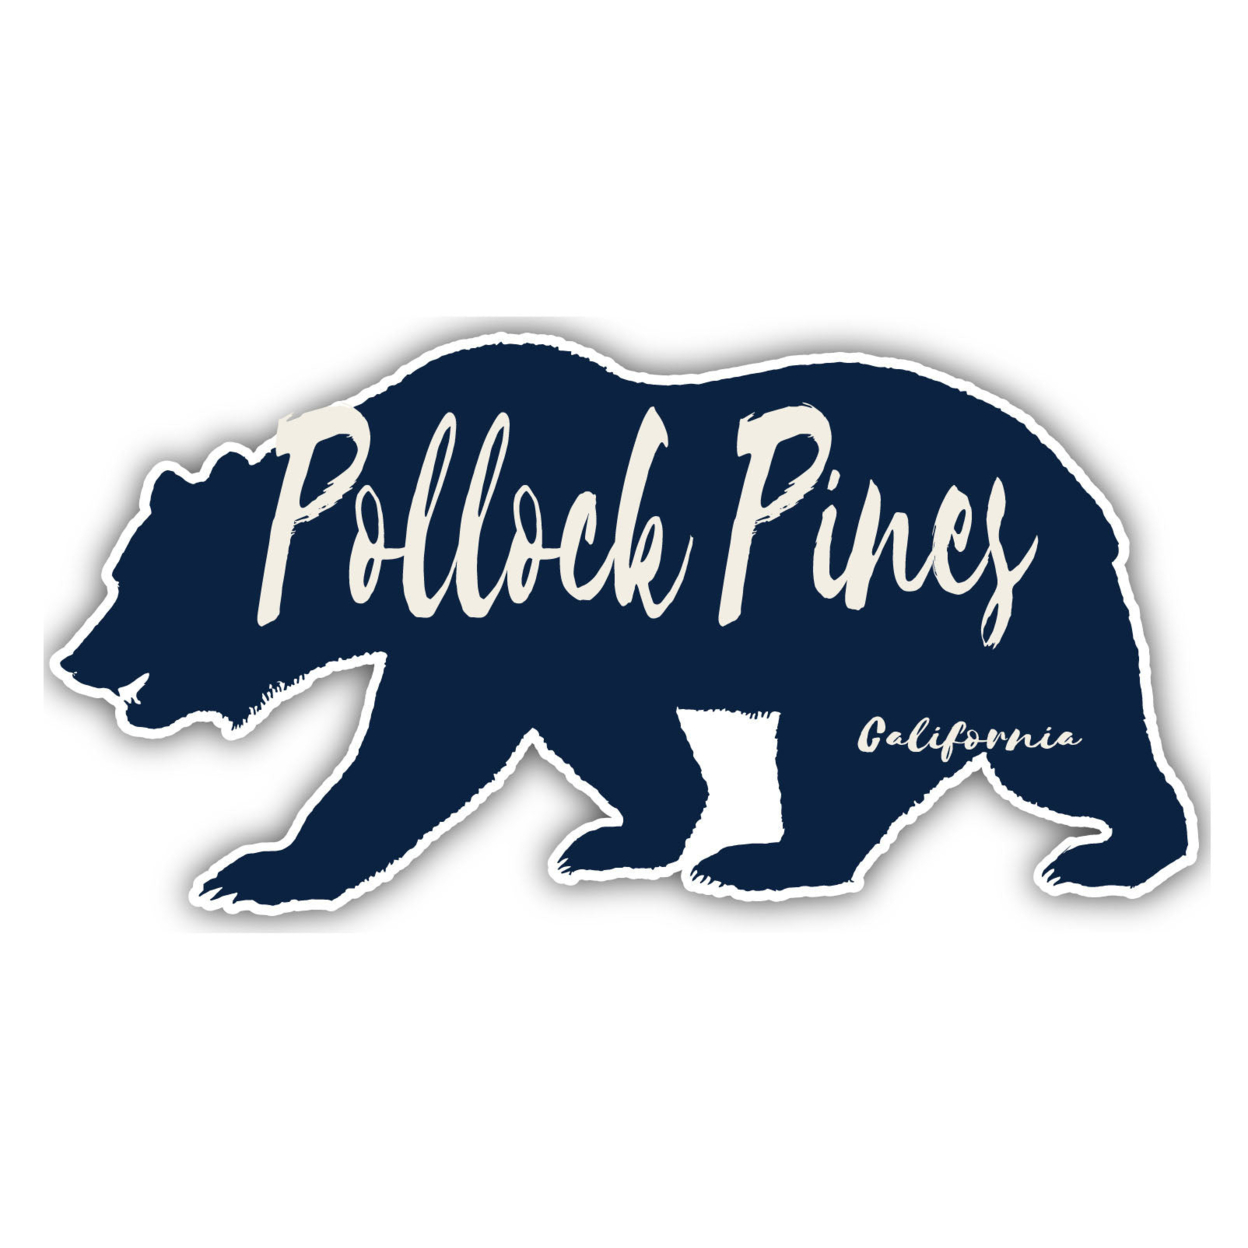 Pollock Pines California Souvenir Decorative Stickers (Choose Theme And Size) - Single Unit, 4-Inch, Bear